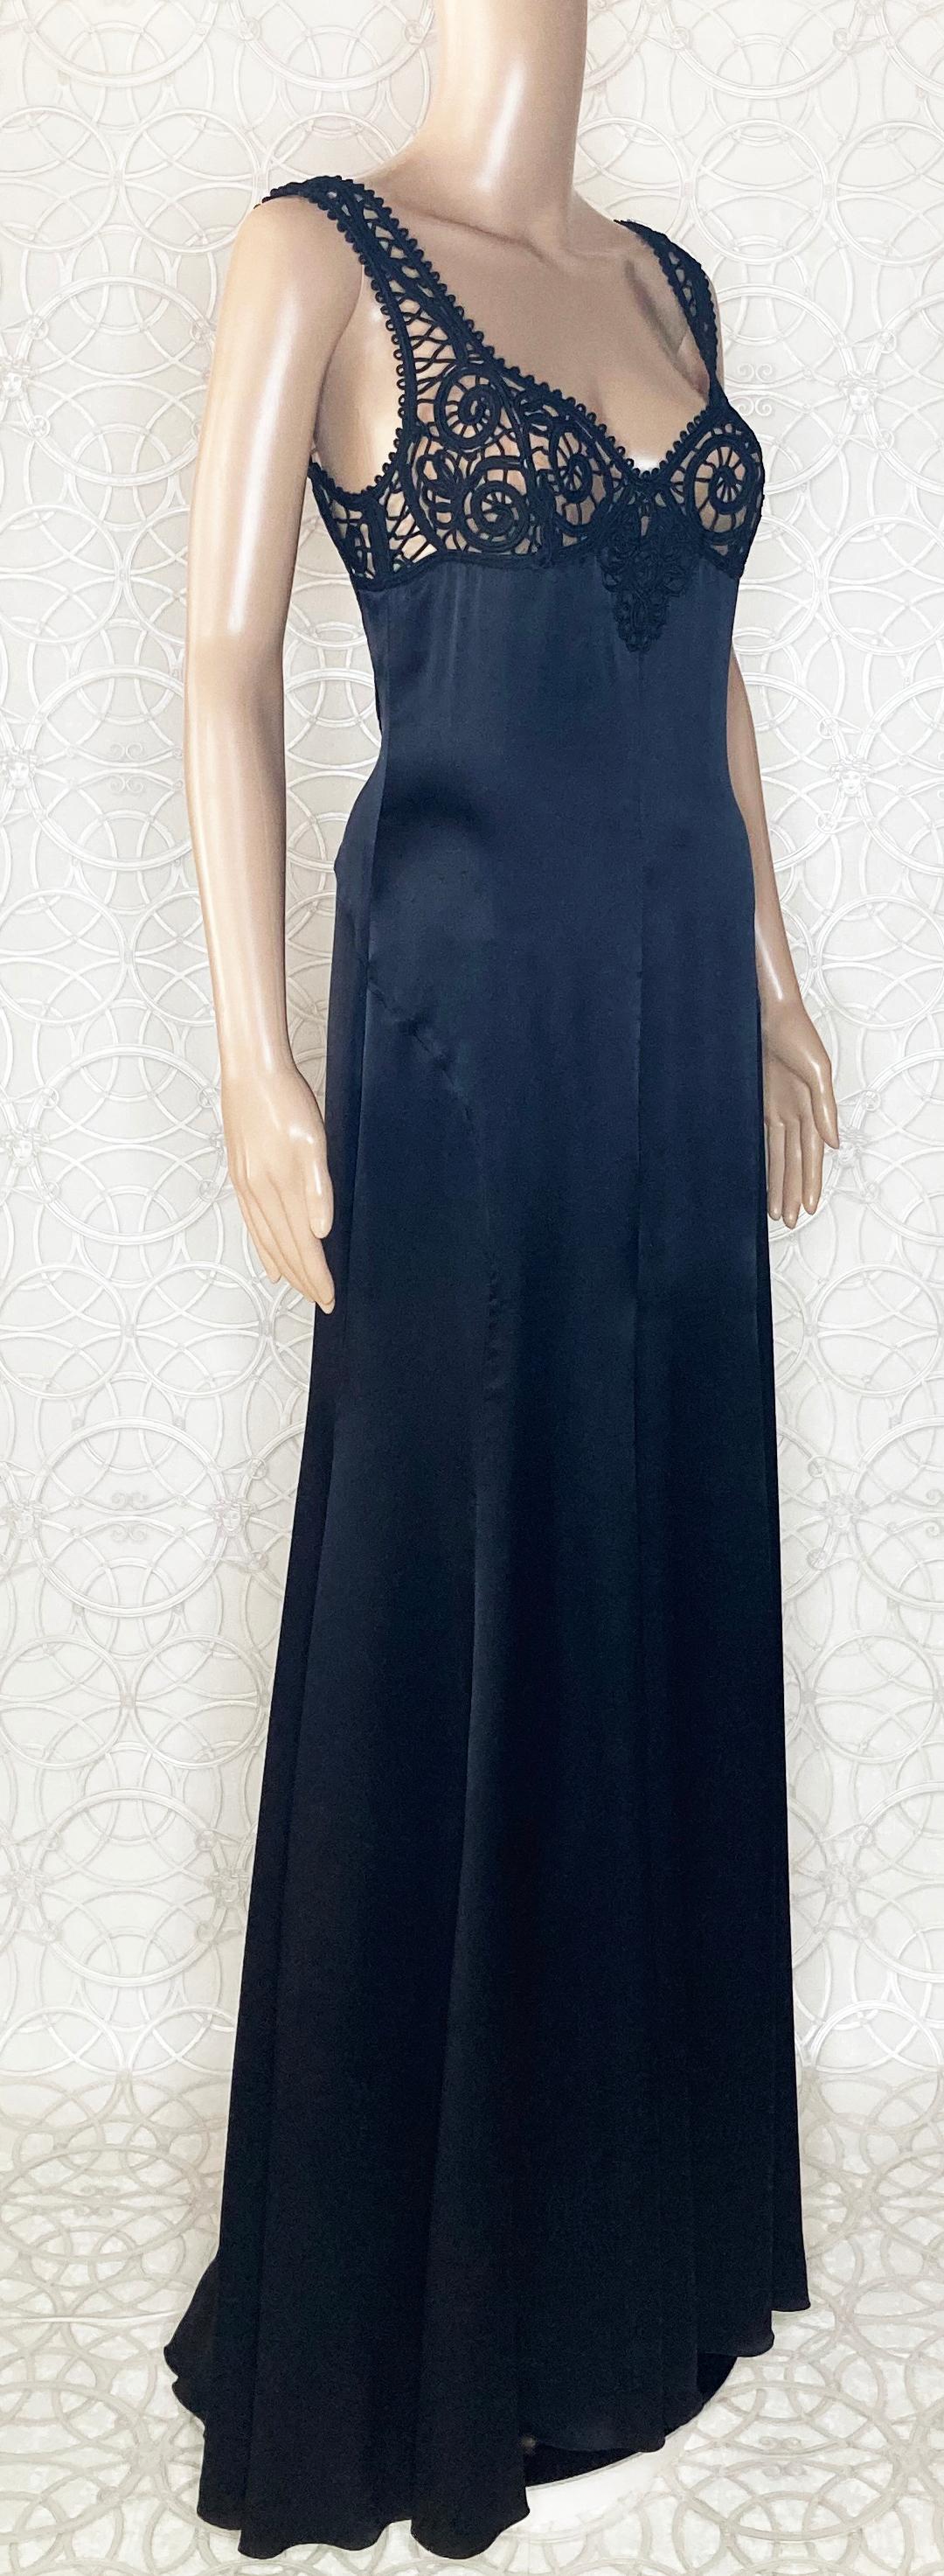 NEW VERSACE BLACK SILK MACRAME LONG DRESS Gown 42 - 6 For Sale 2